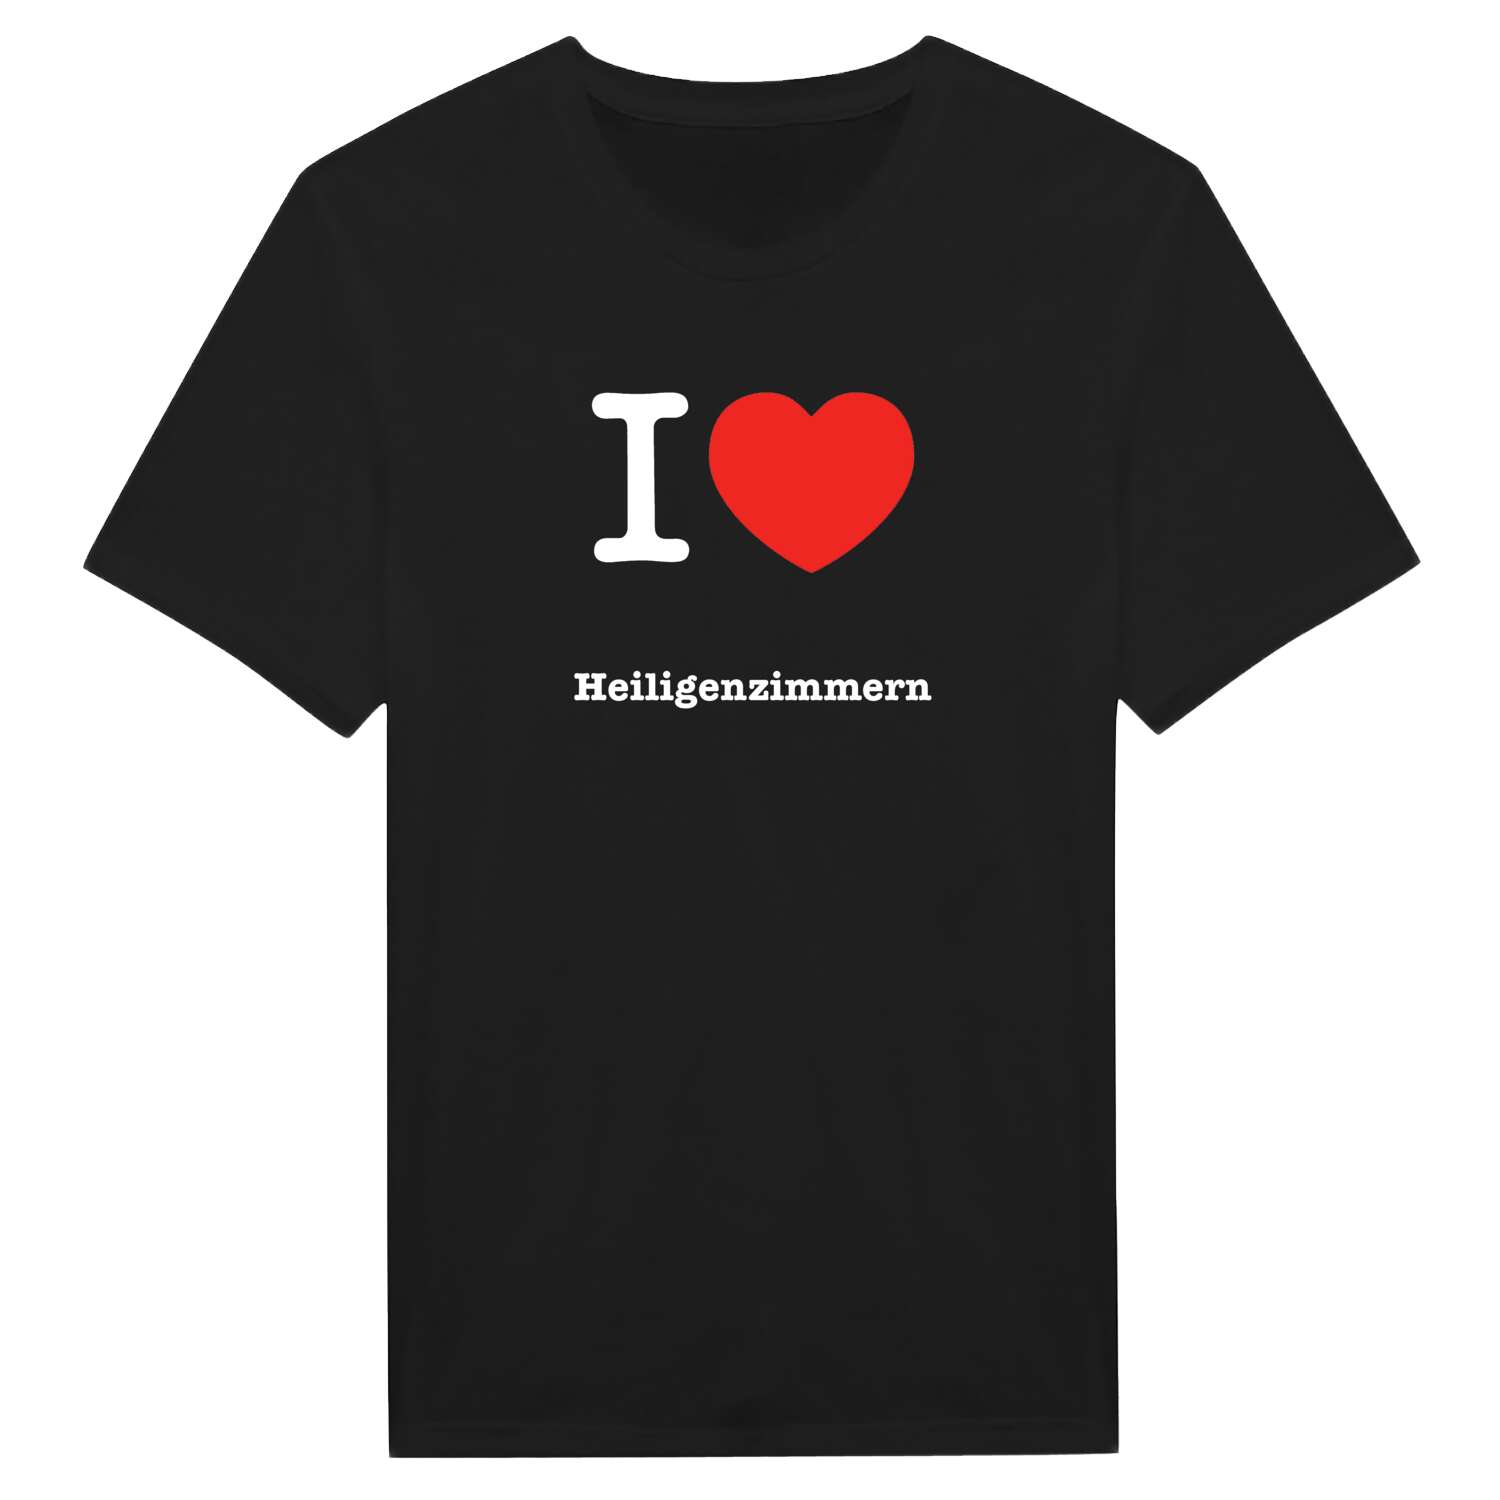 Heiligenzimmern T-Shirt »I love«